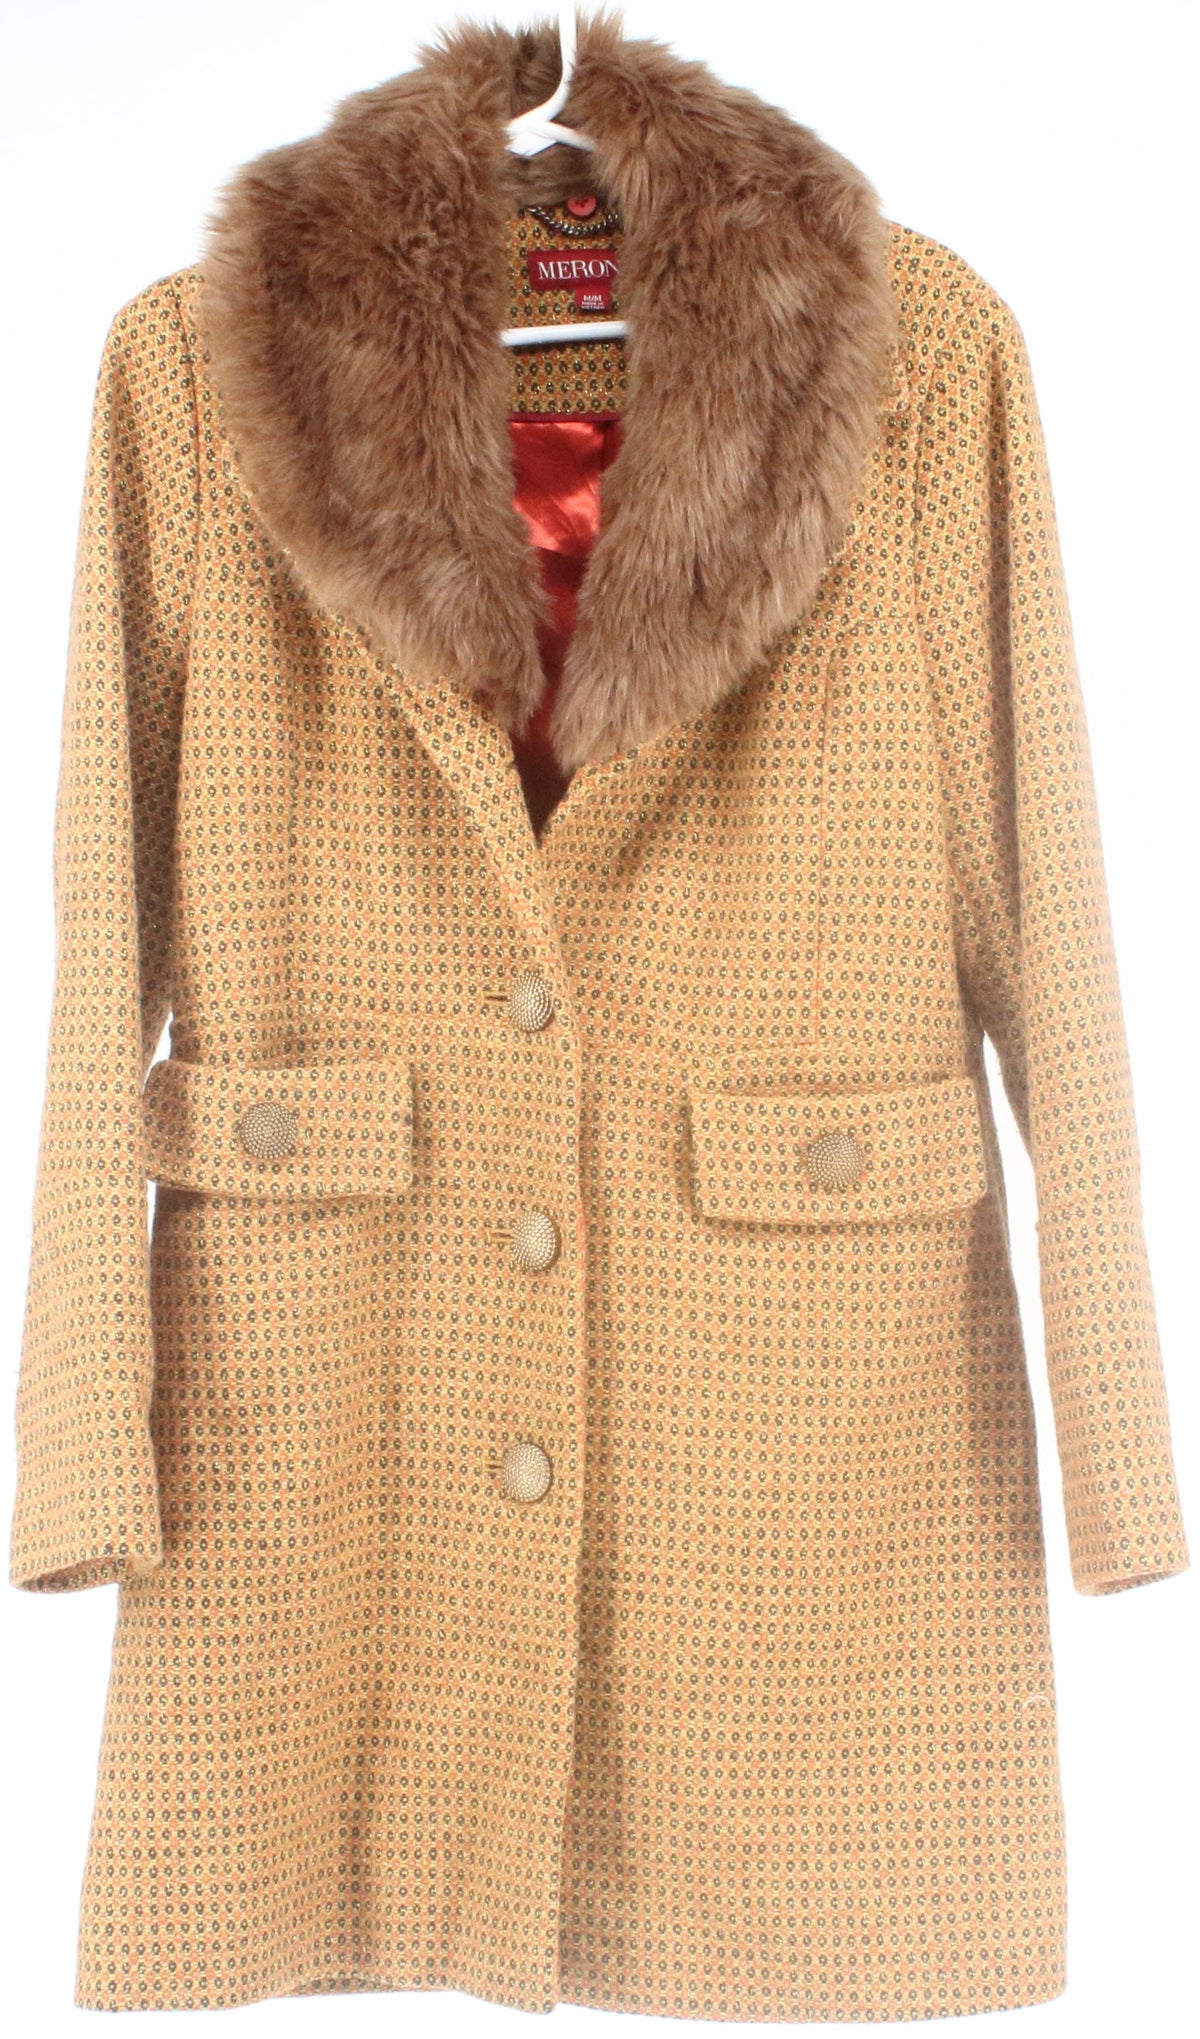 Merona Mustard Women's Coat With Faux Fur Collar